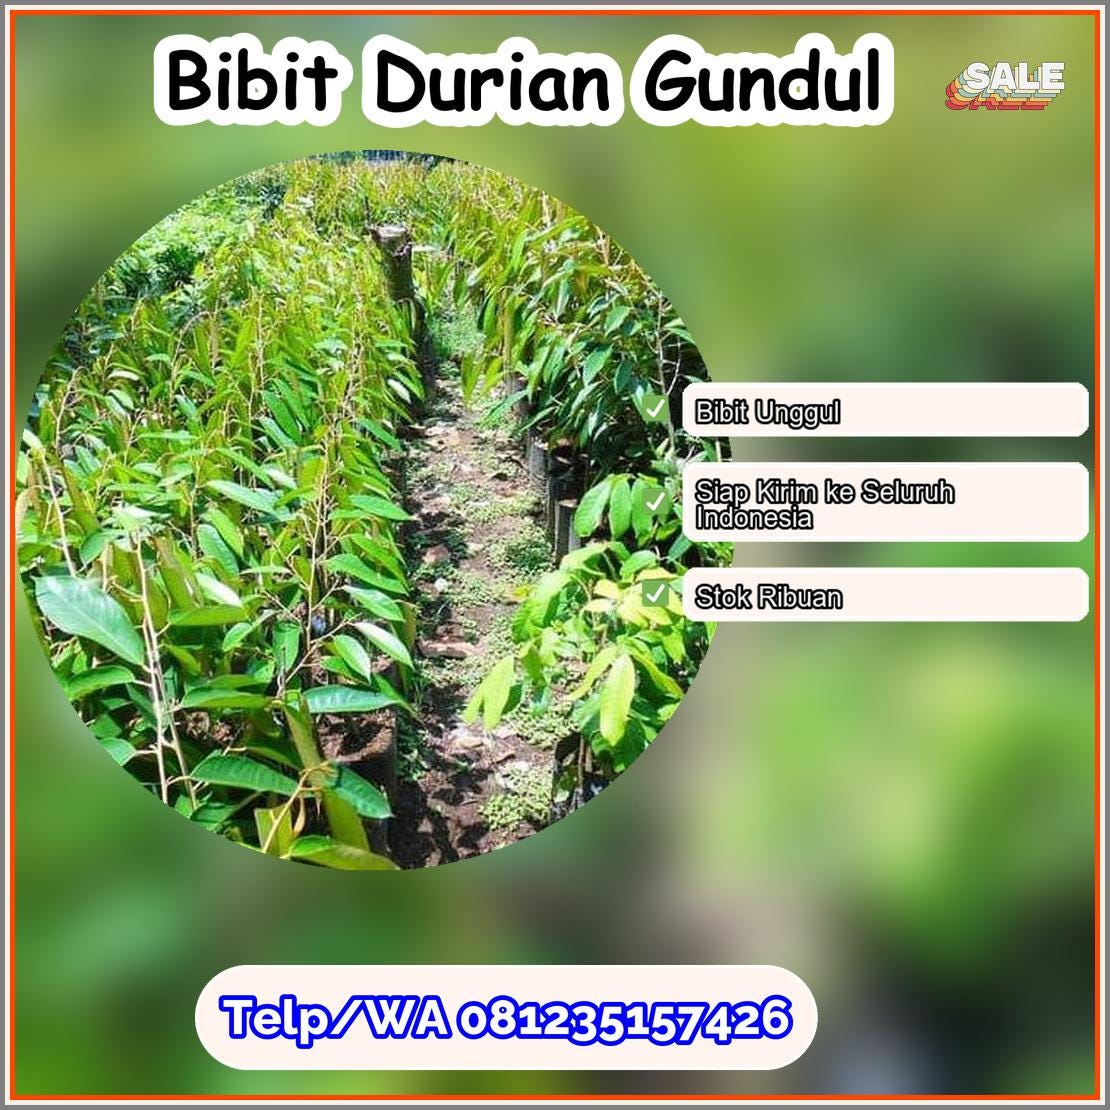 Grosir Bibit Durian Gundul Ogan Komering Ulu Timur